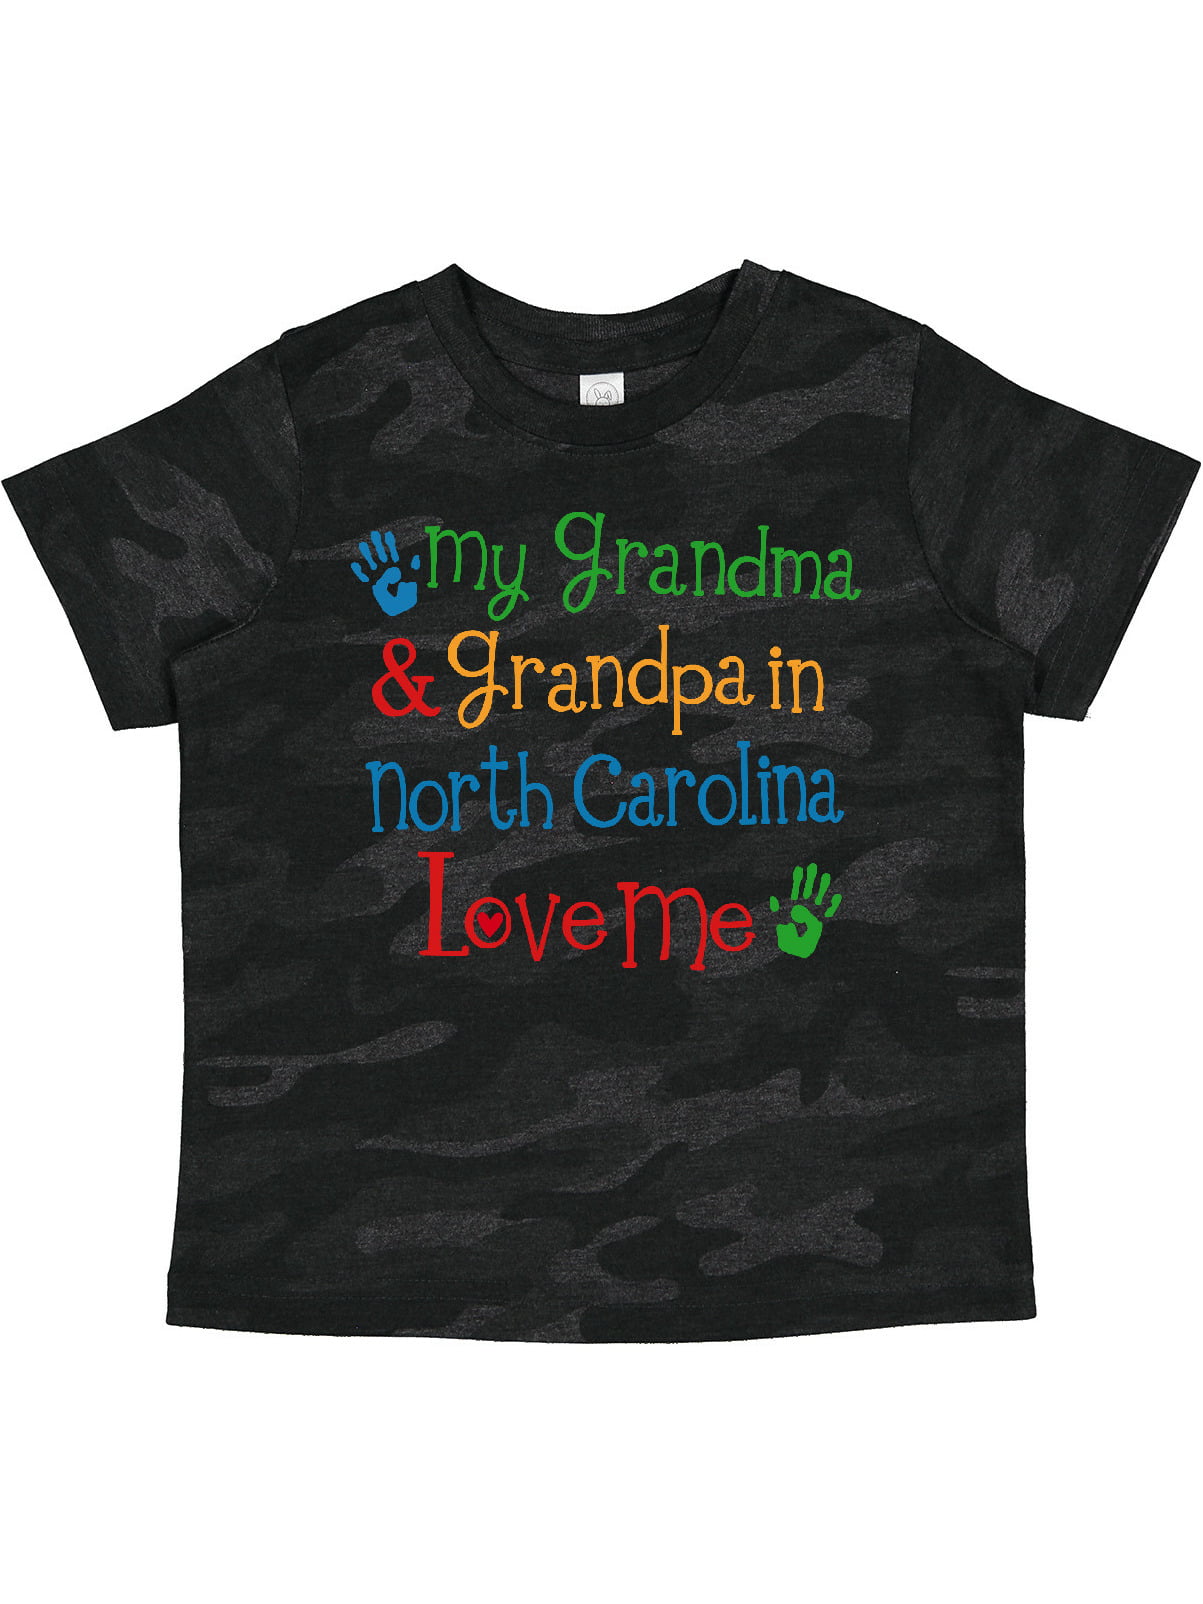 My Grandma in North Carolina Loves Me Toddler/Kids Short Sleeve T-Shirt 